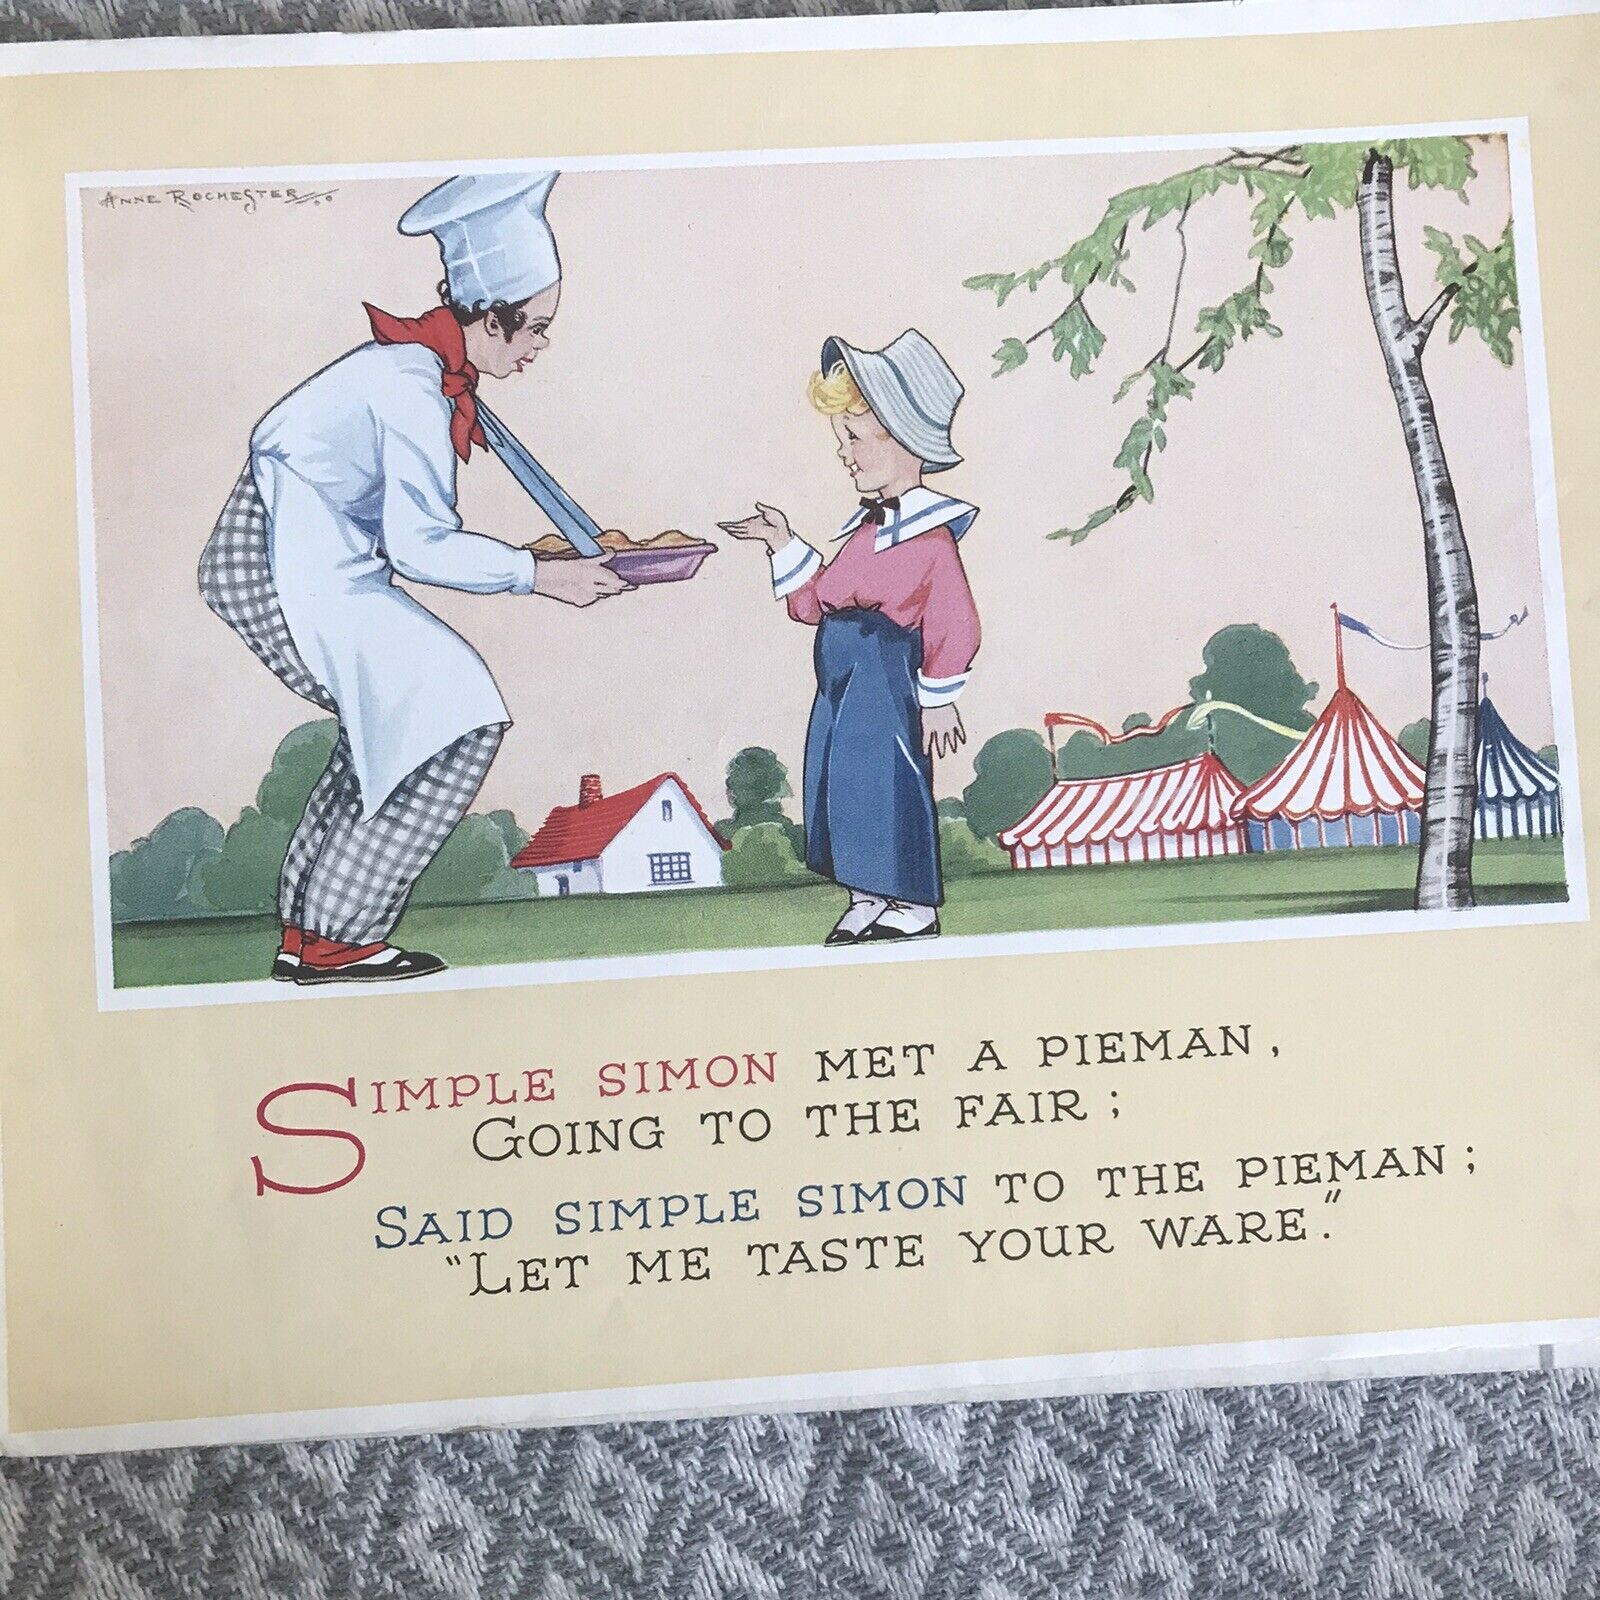 1946 Nursery Rhymes - Anne Rochester Illust(Raphael Tuck & Sons Ltd) Honeyburn Books (UK)